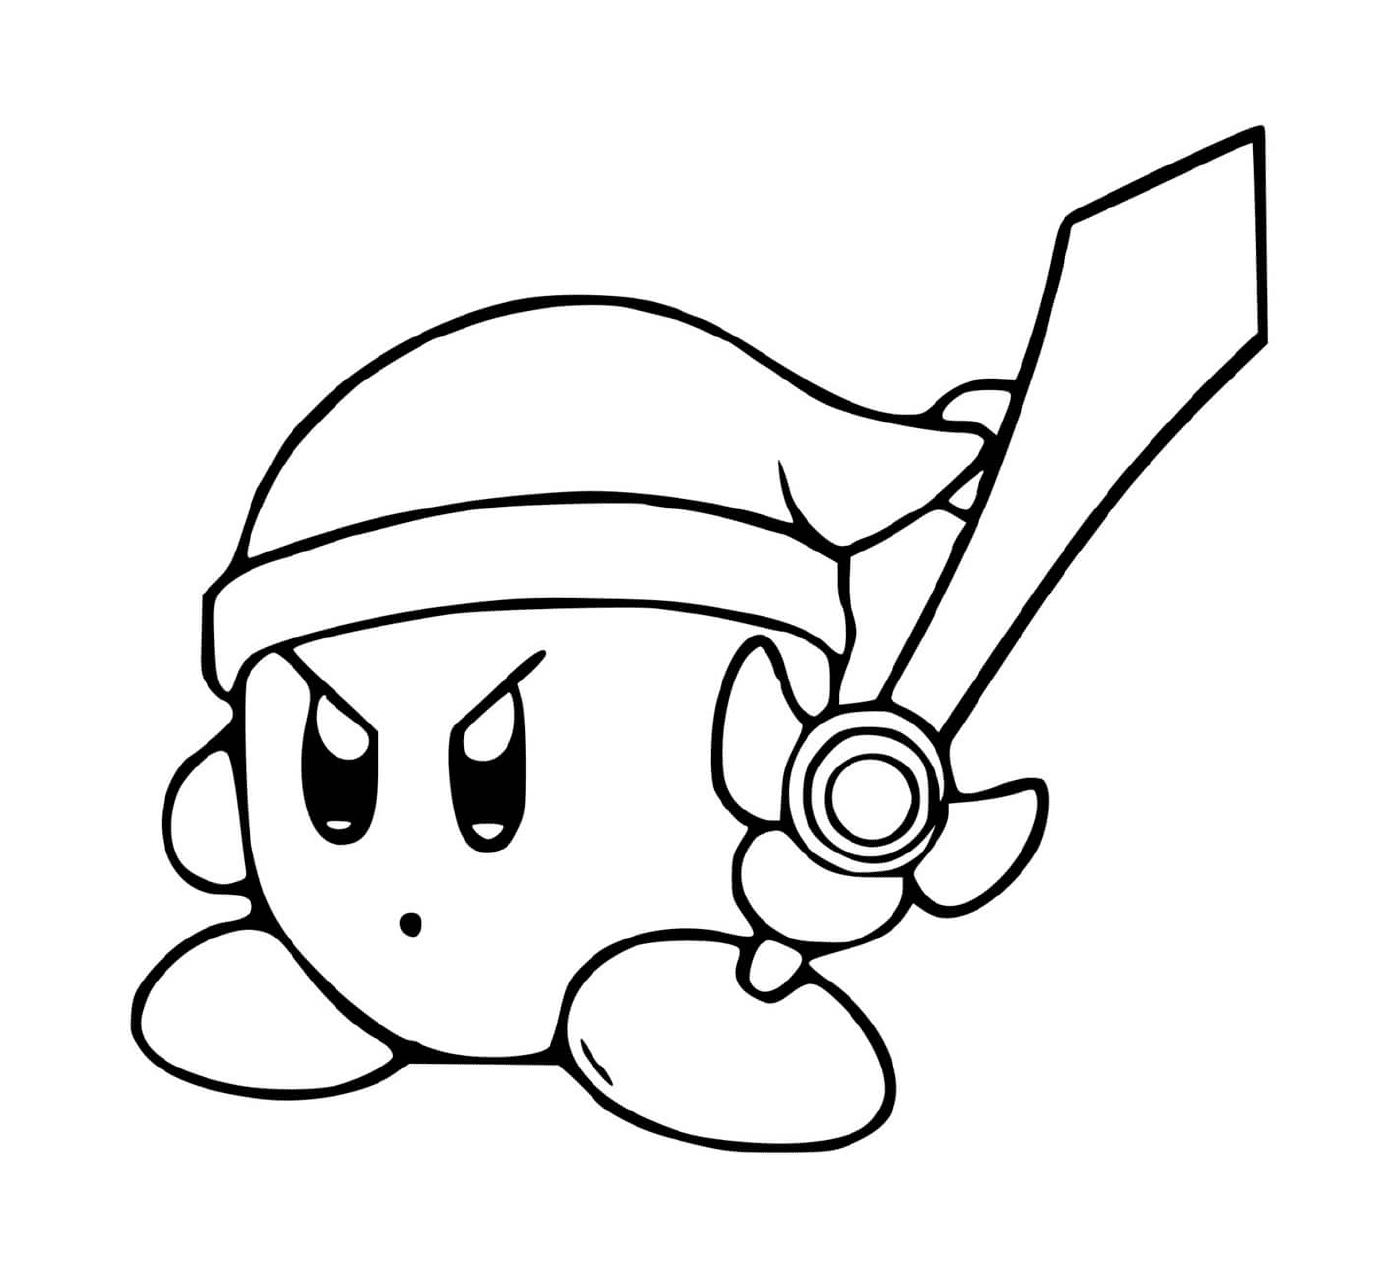  Kirby in Zelda mode with sword 